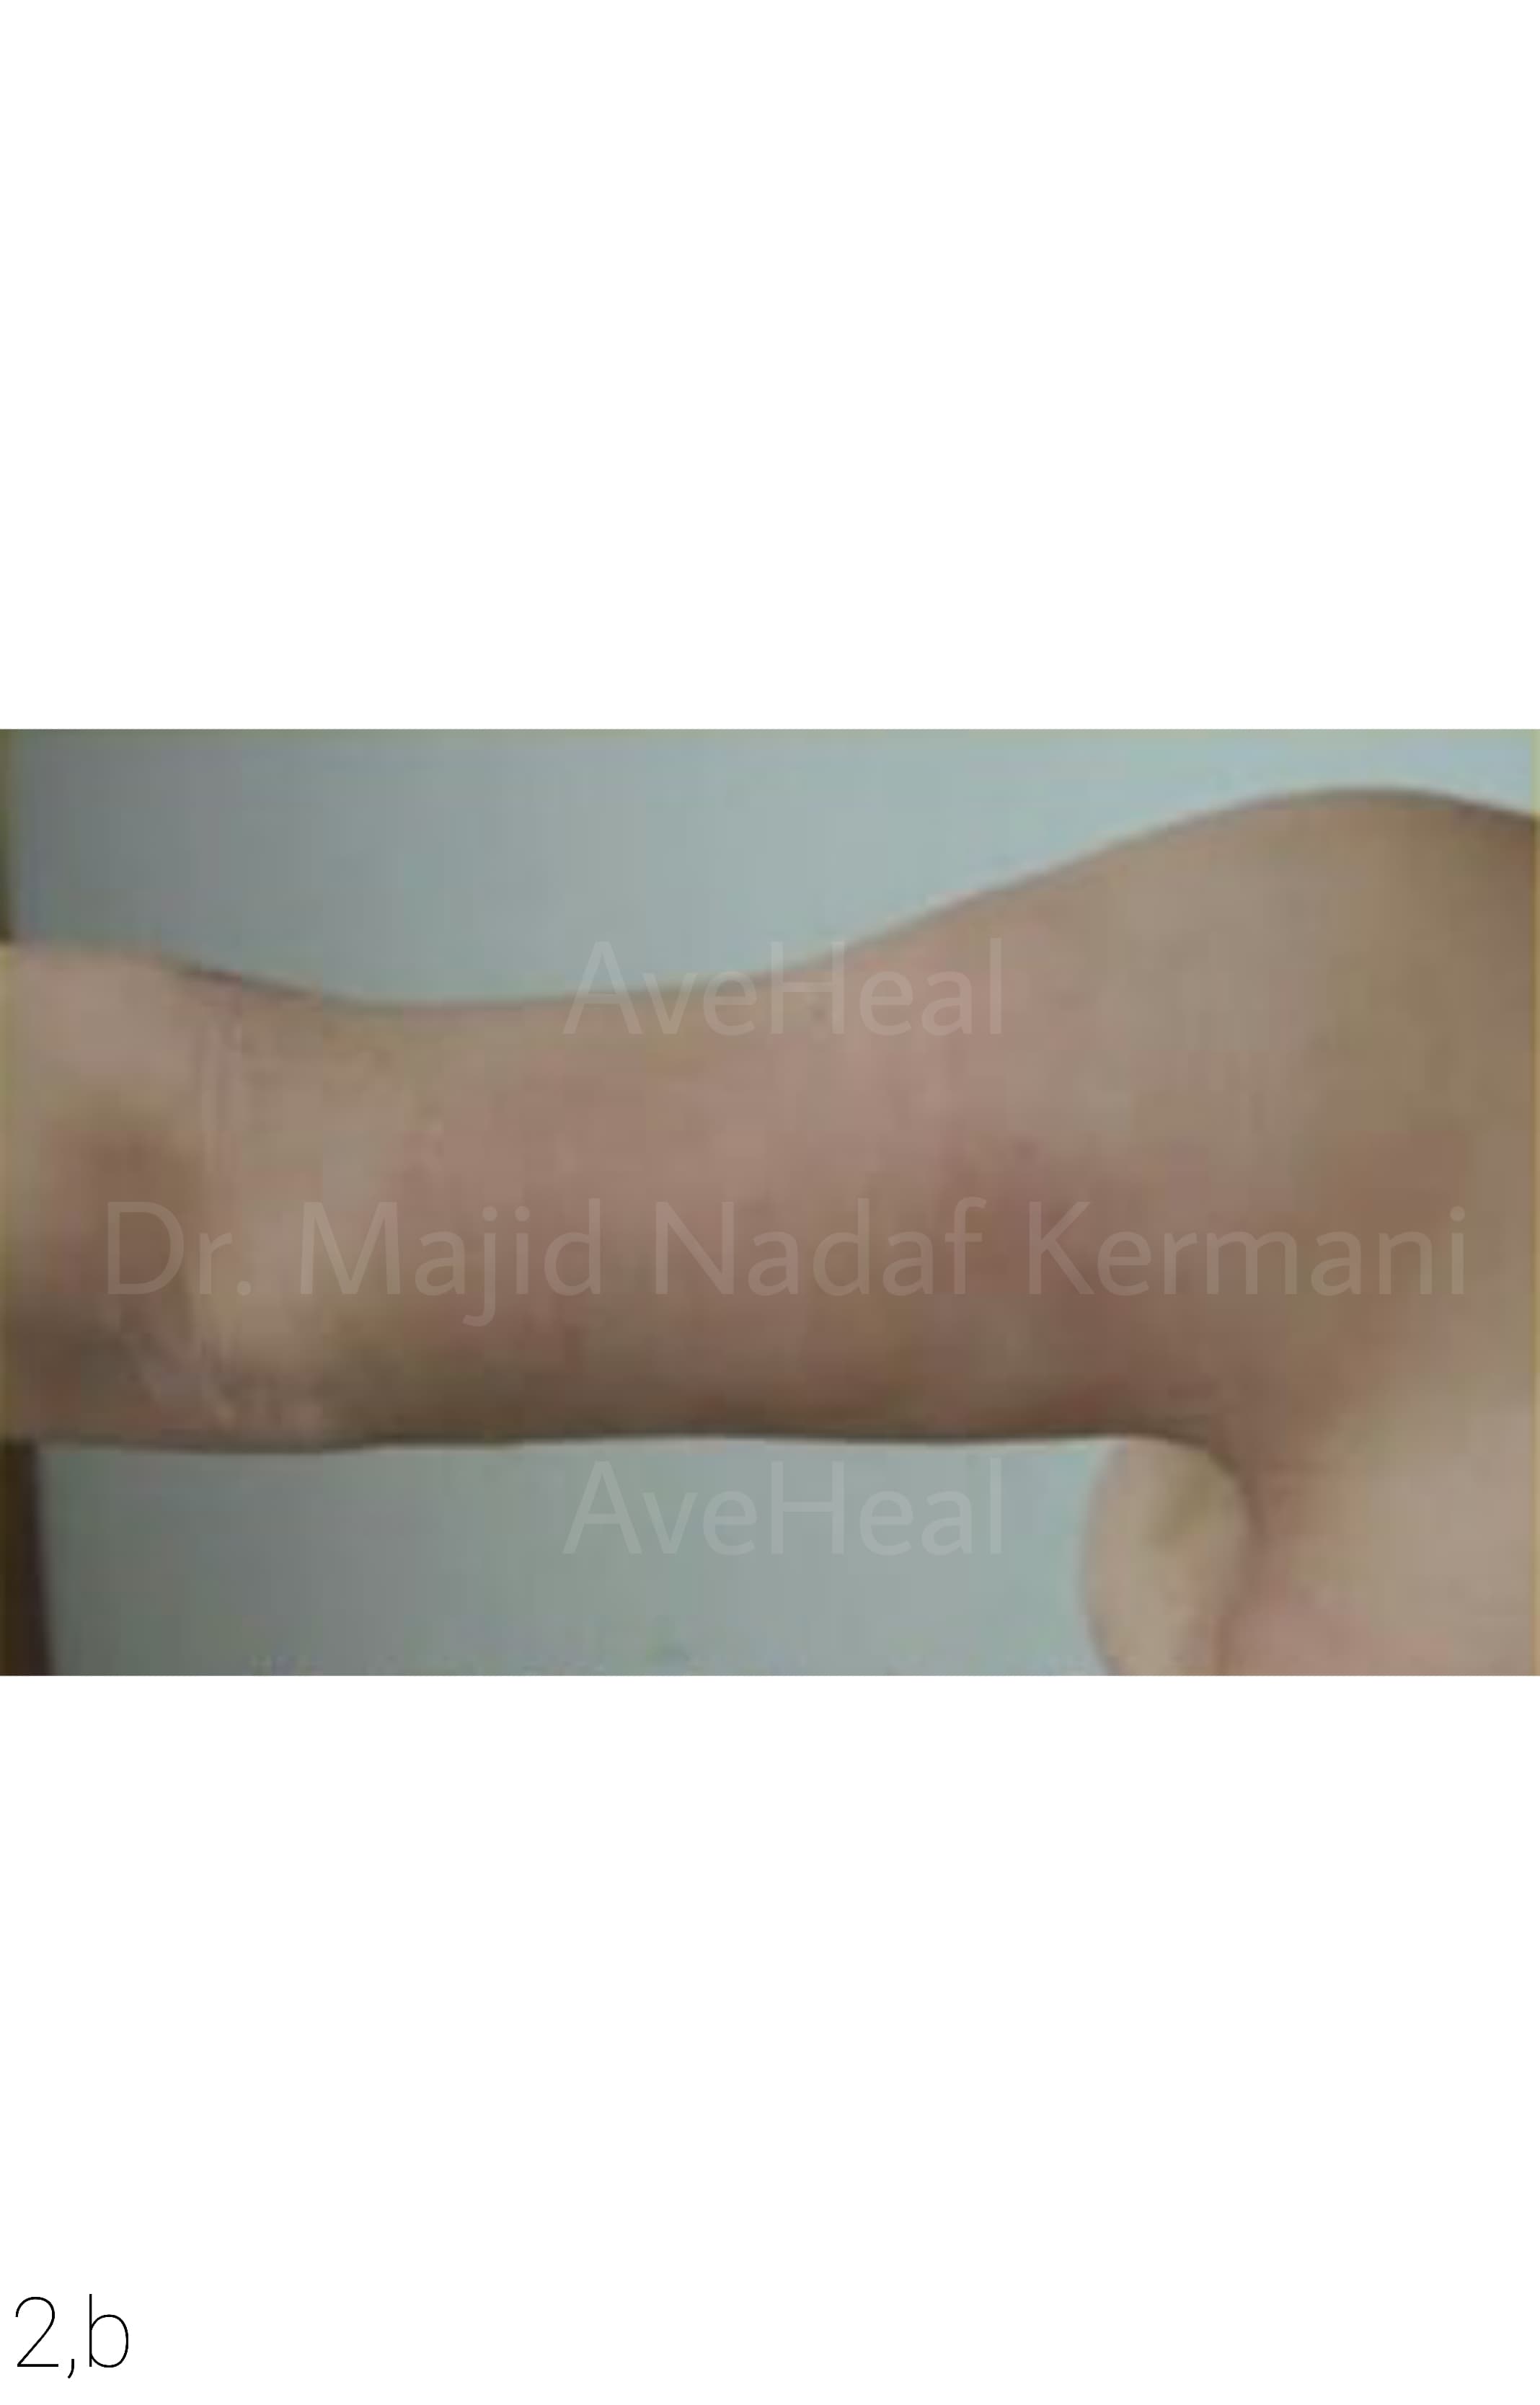 after-arm-lift-dr-majid-nadaf-kermani